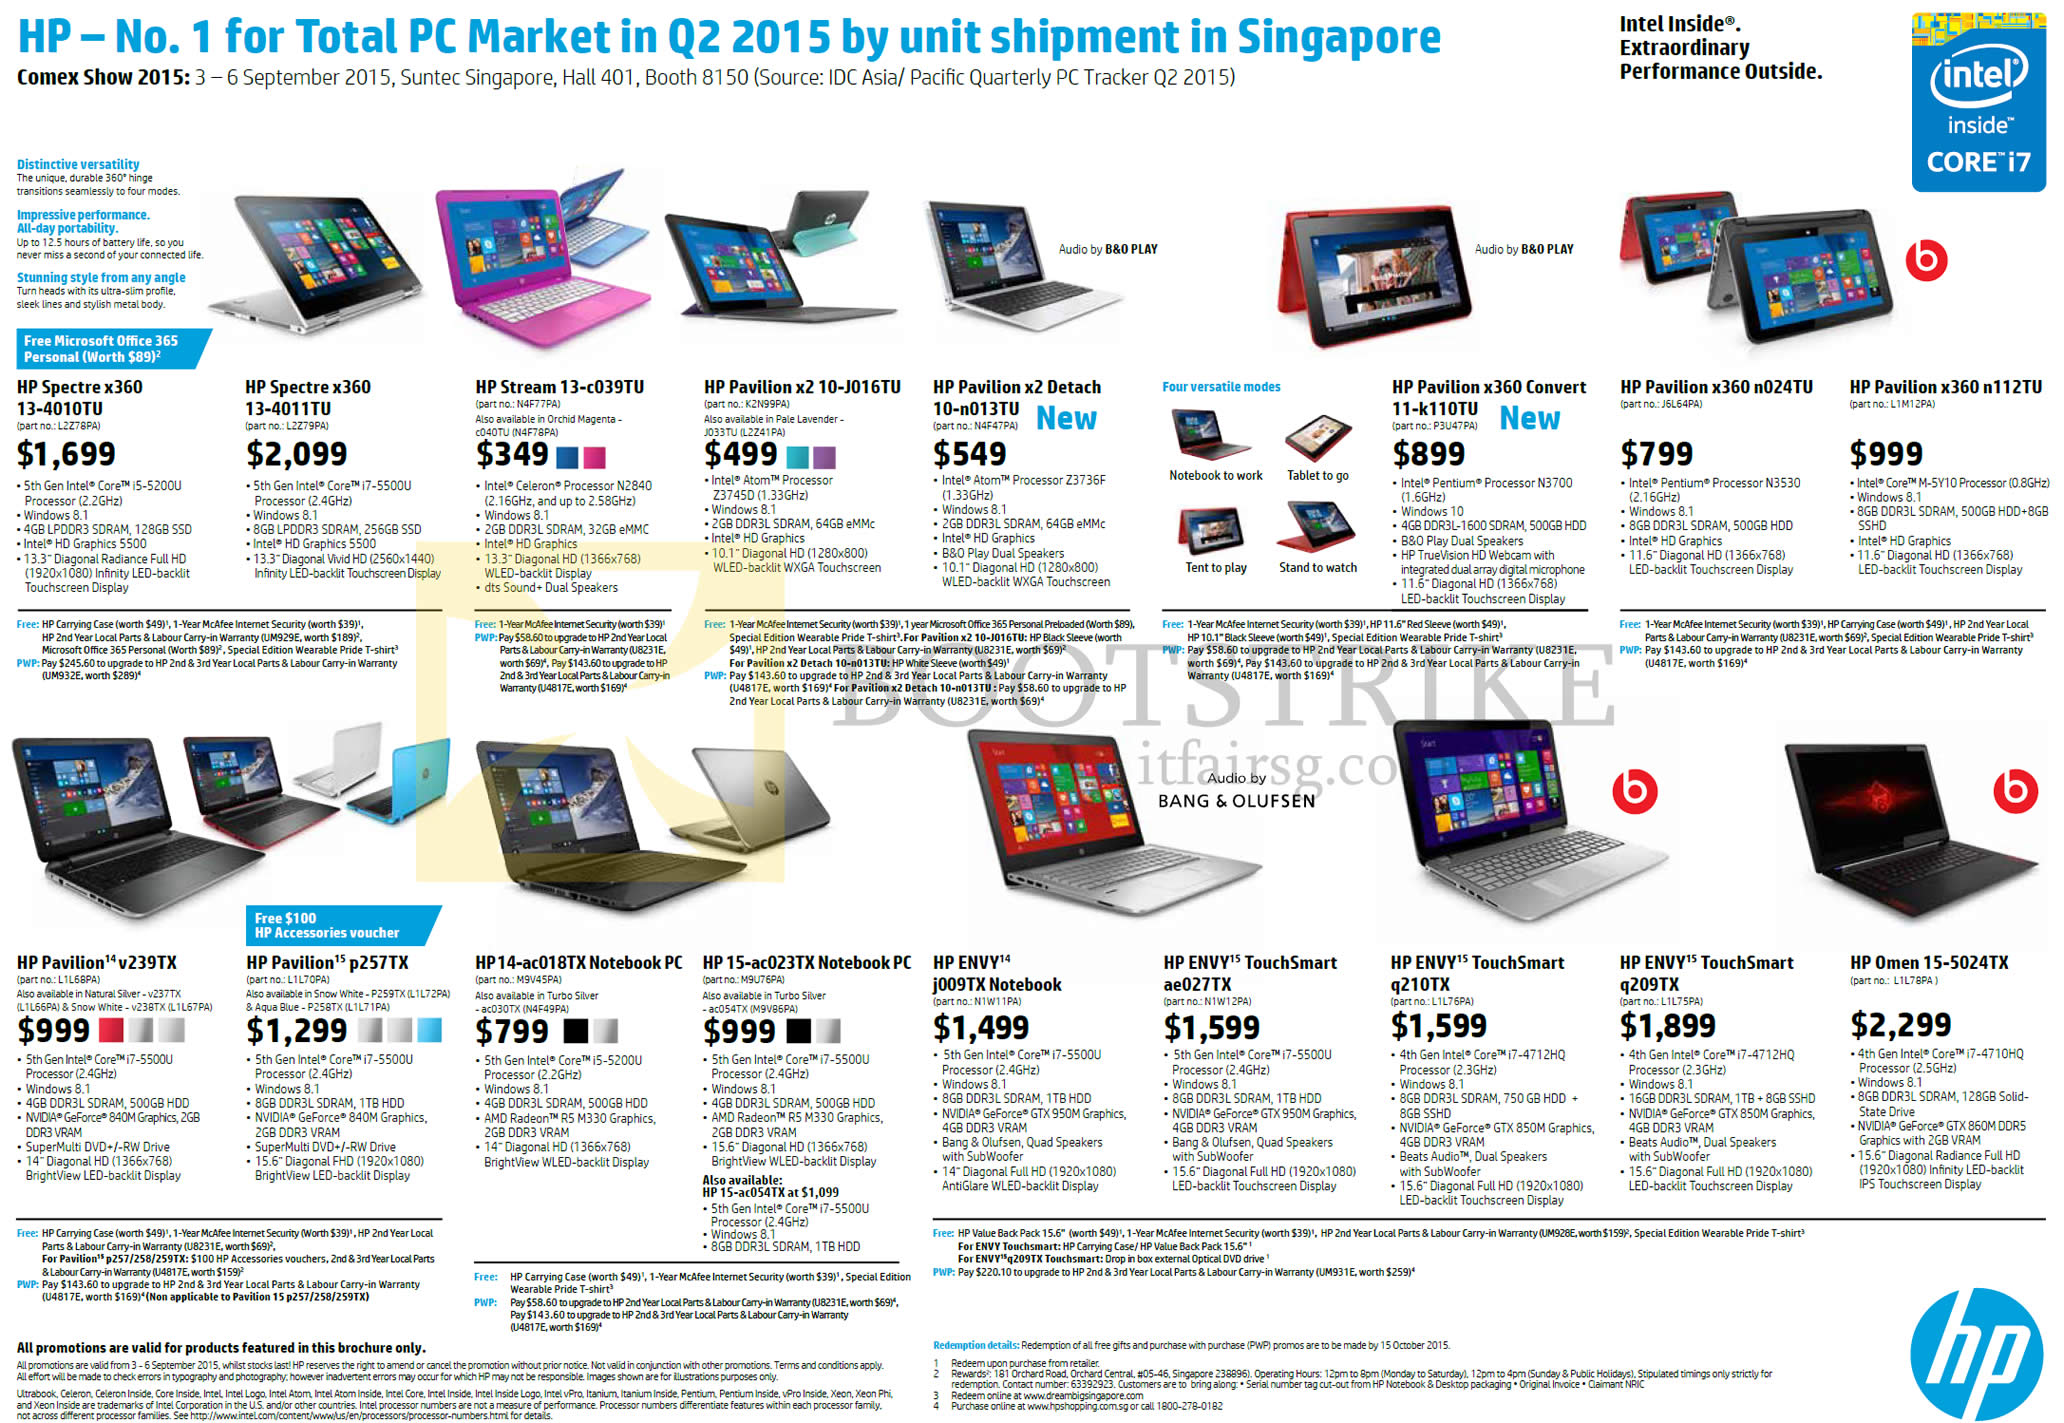 COMEX 2015 price list image brochure of HP Notebooks Spectre X360 13-4010TU 4011TU, Stream 13-c039TU, Pavilion X2 10-J016TU, X2 Detach 10-n013TU V239TX P257TX, X360 Convert N024TU N112TU, TouchSmart Ae027TX